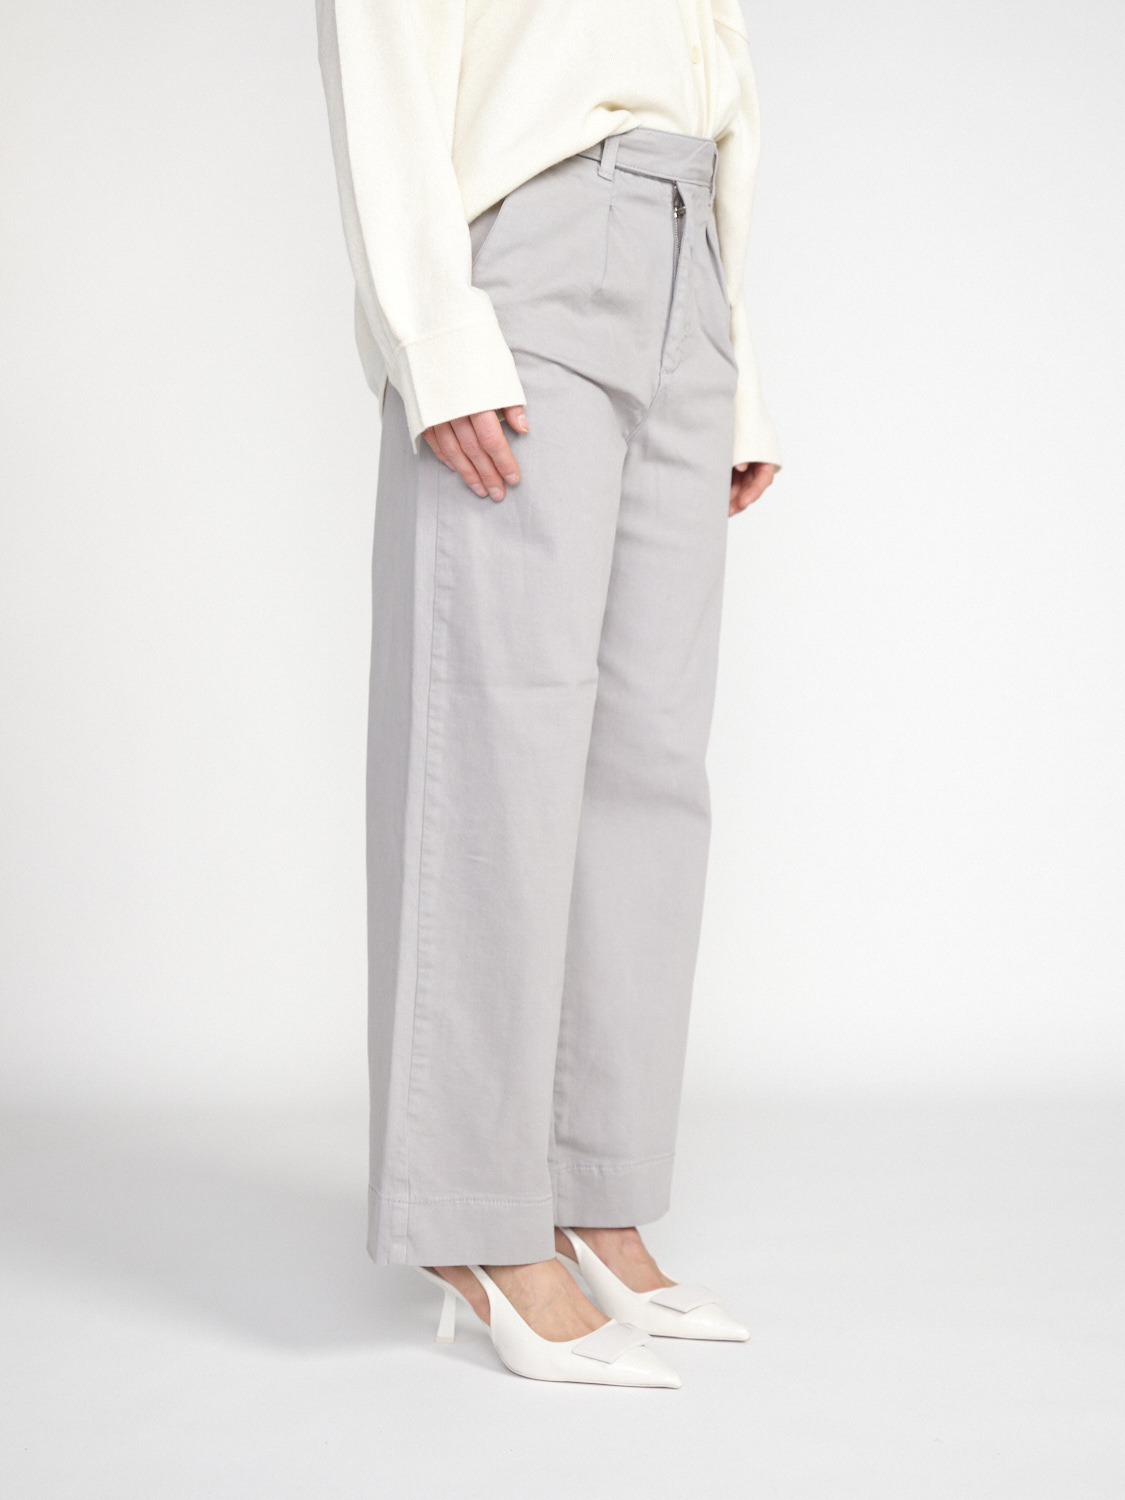 Gitta Banko Lola - Stretchy wide-leg cotton denim  grey XS/S